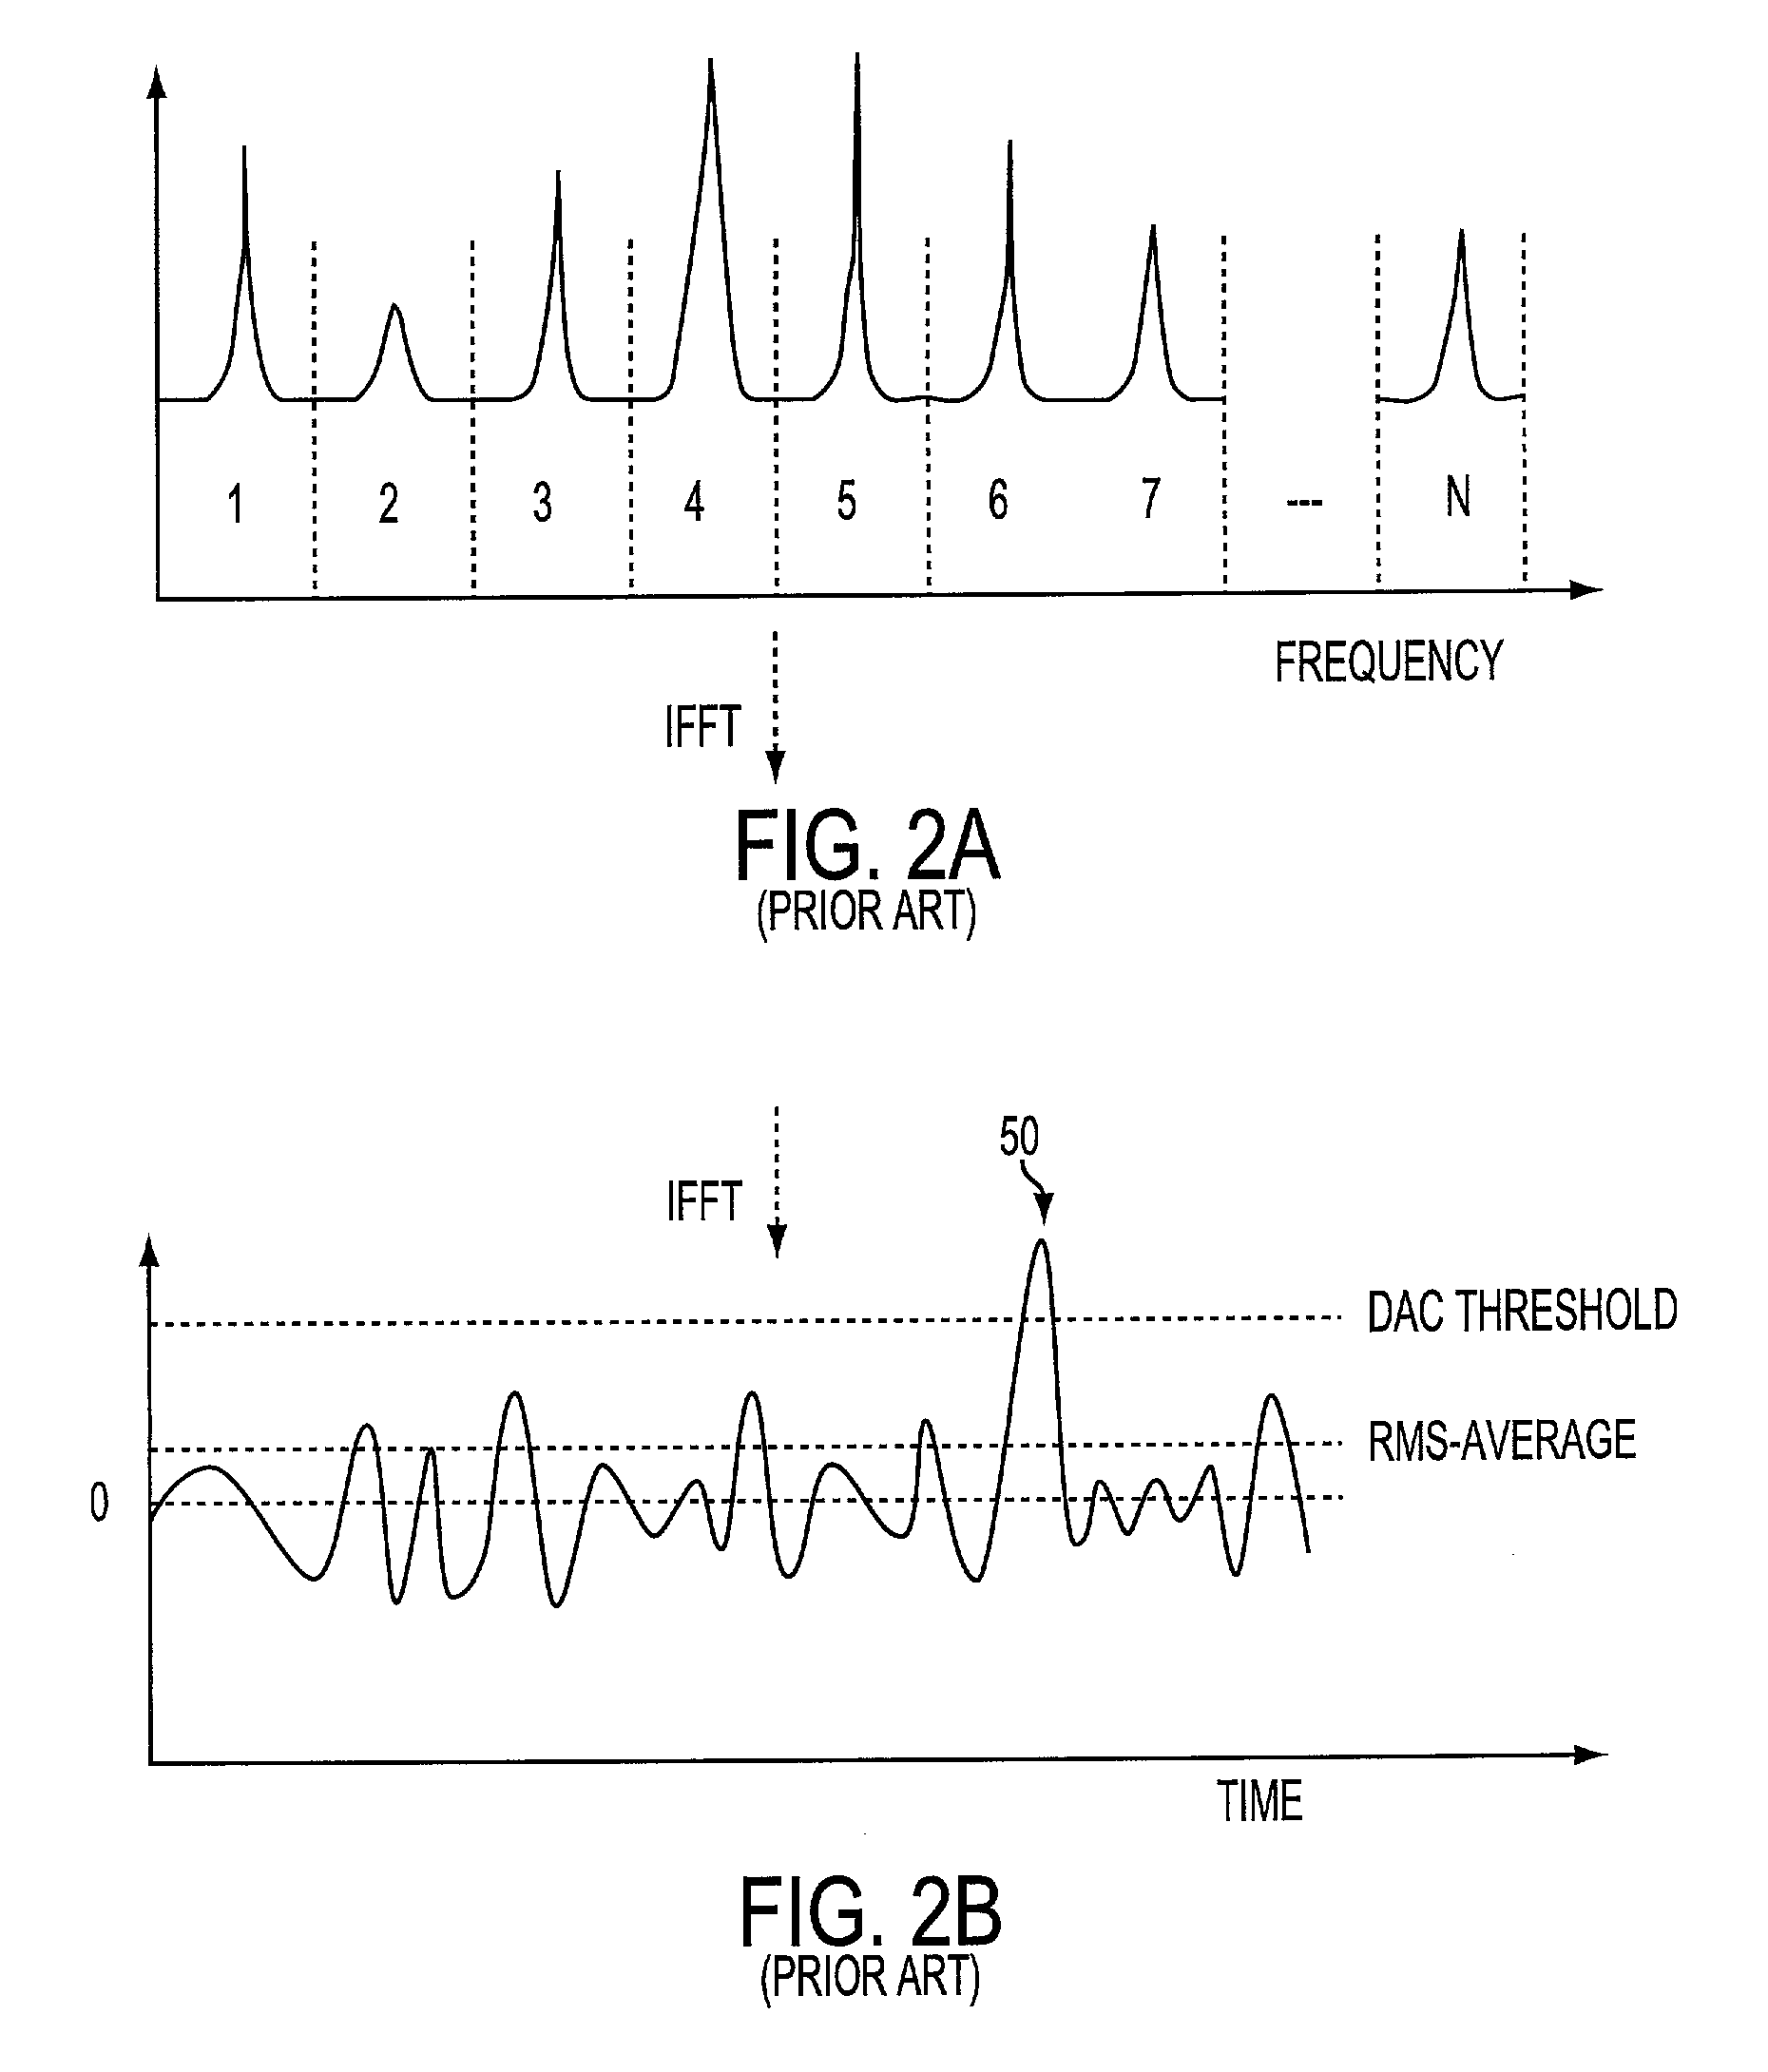 Side tones packets injection (STPI) for PAR reduction